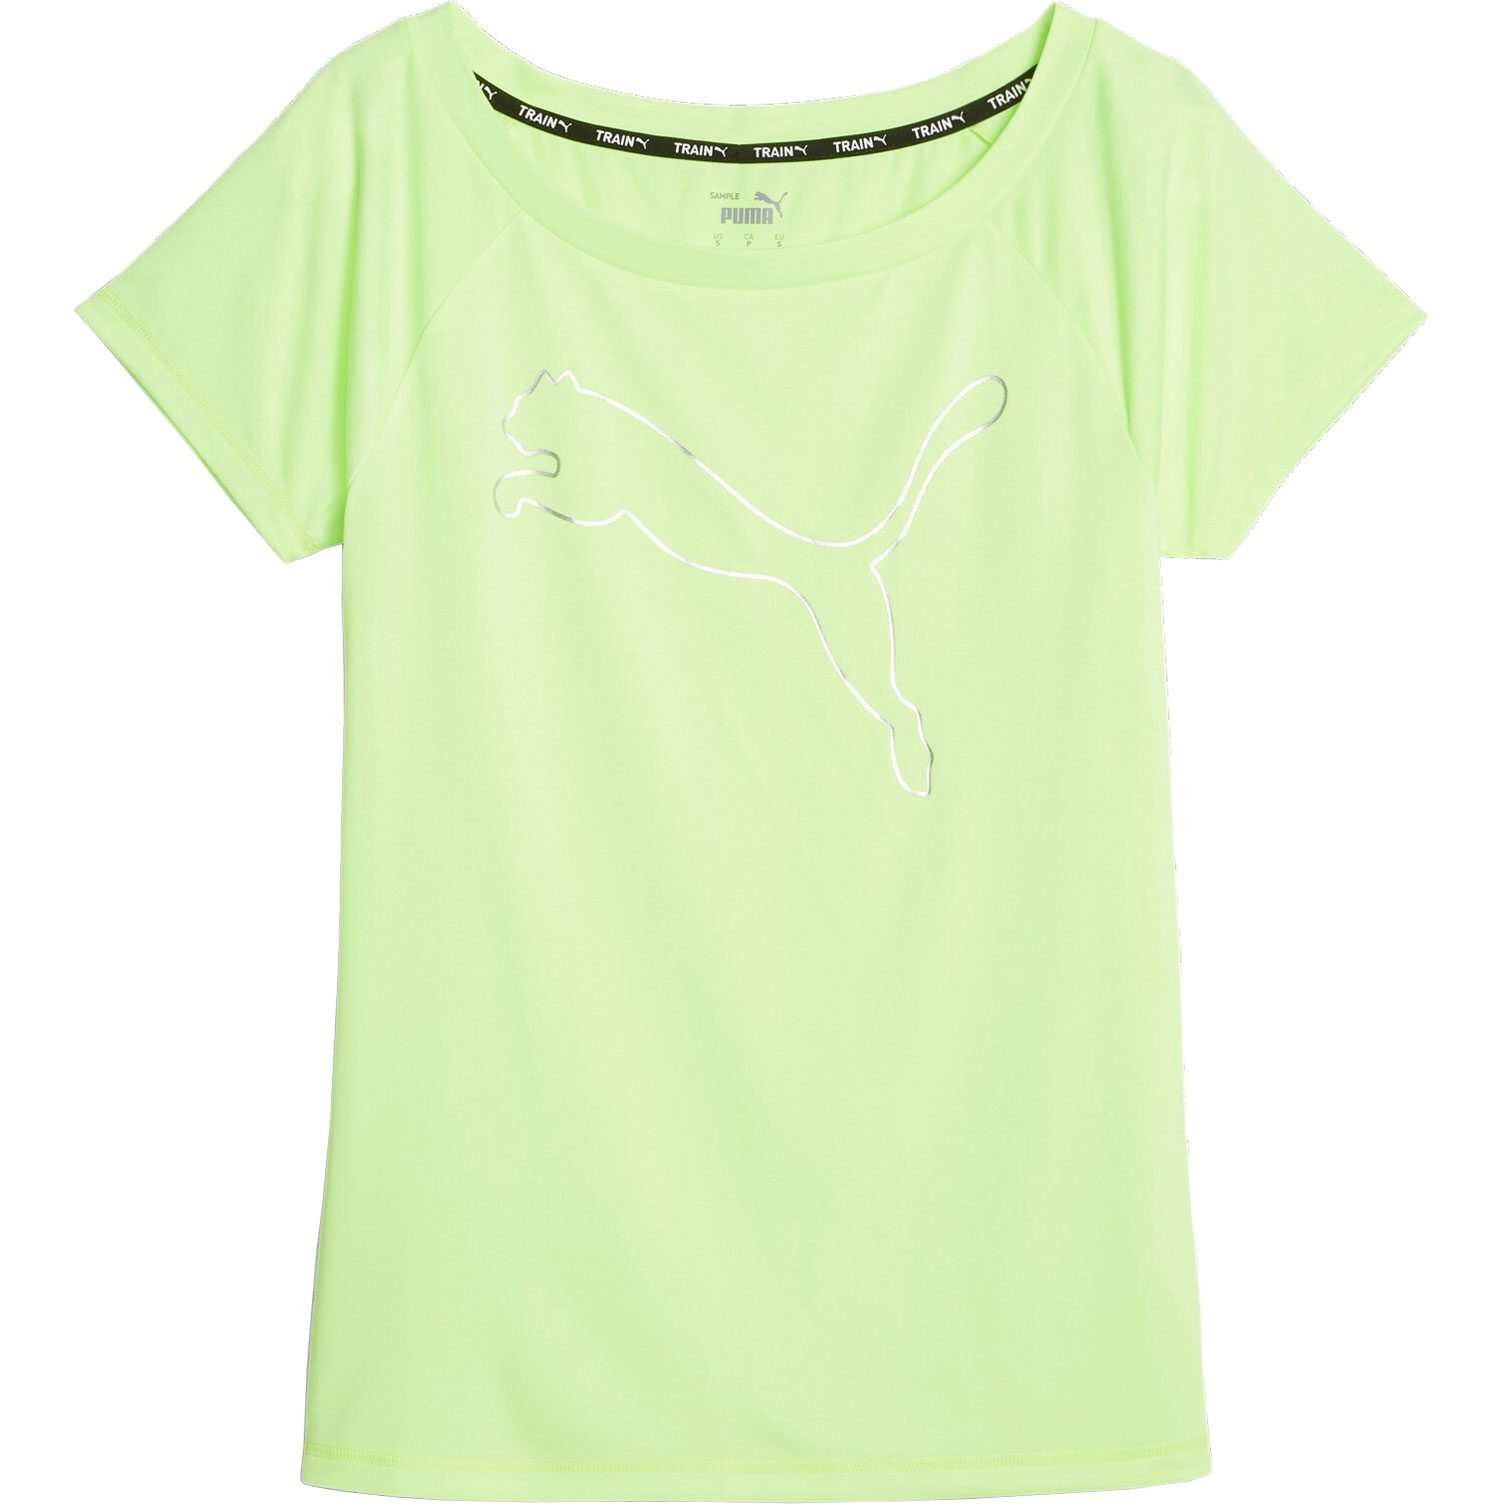 Puma - Train Favorite Jersey Cat T-Shirt Damen speed green kaufen im Sport  Bittl Shop